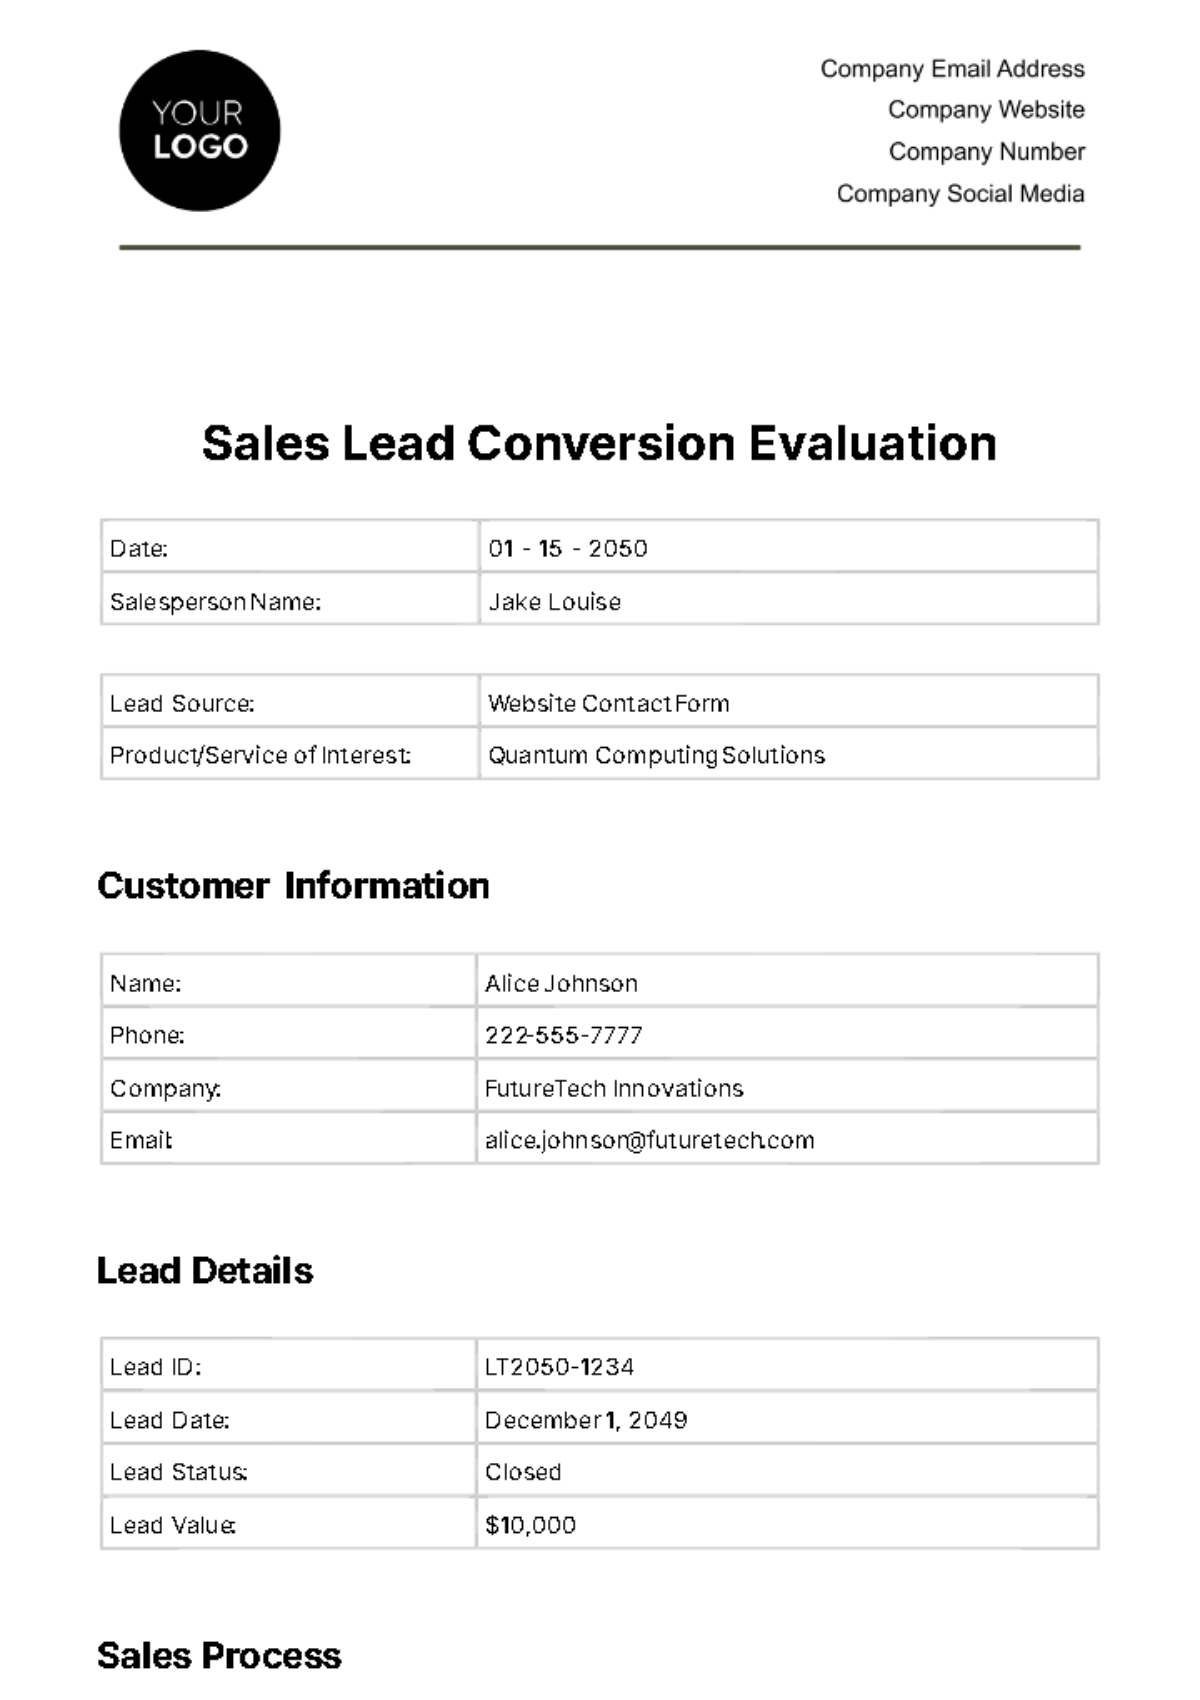 Sales Lead Conversion Evaluation Template